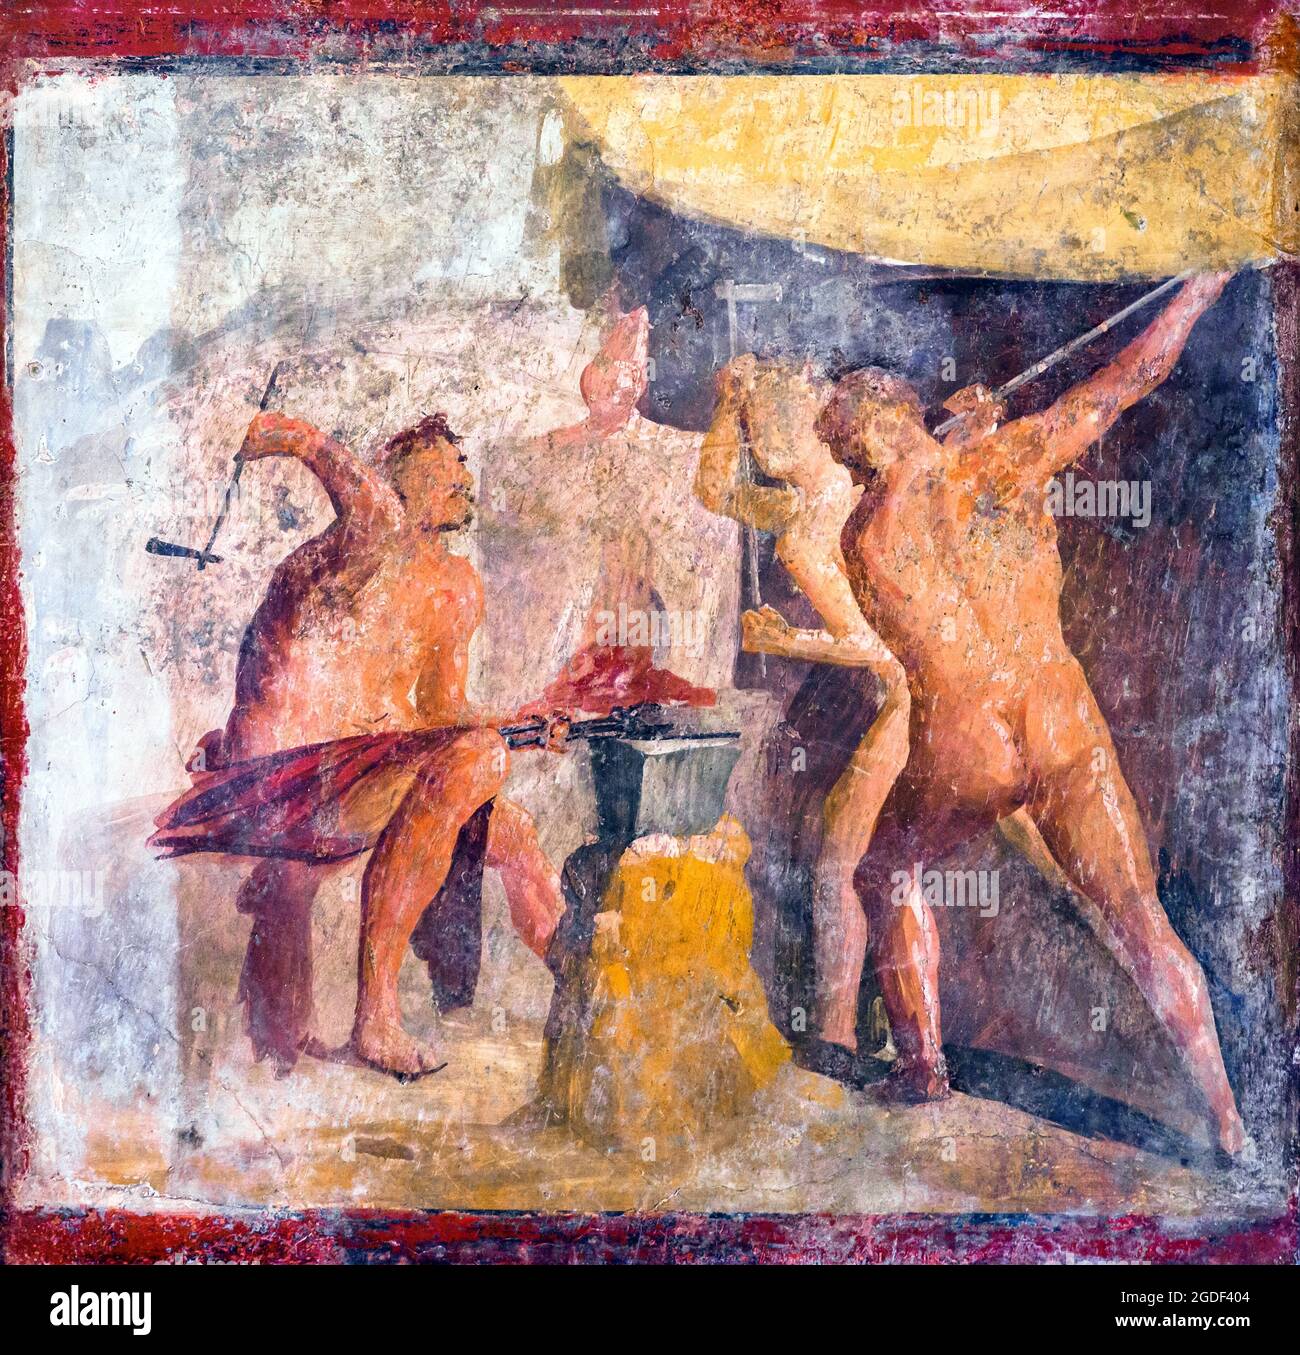 Hephaestus' workshop In Hephaestus' workshop the Cyclops forge the weapons of the heroes fresco Pompeii, Casa delle Quadrighe (House of the Quadrigas) 68-79 AD Stock Photo